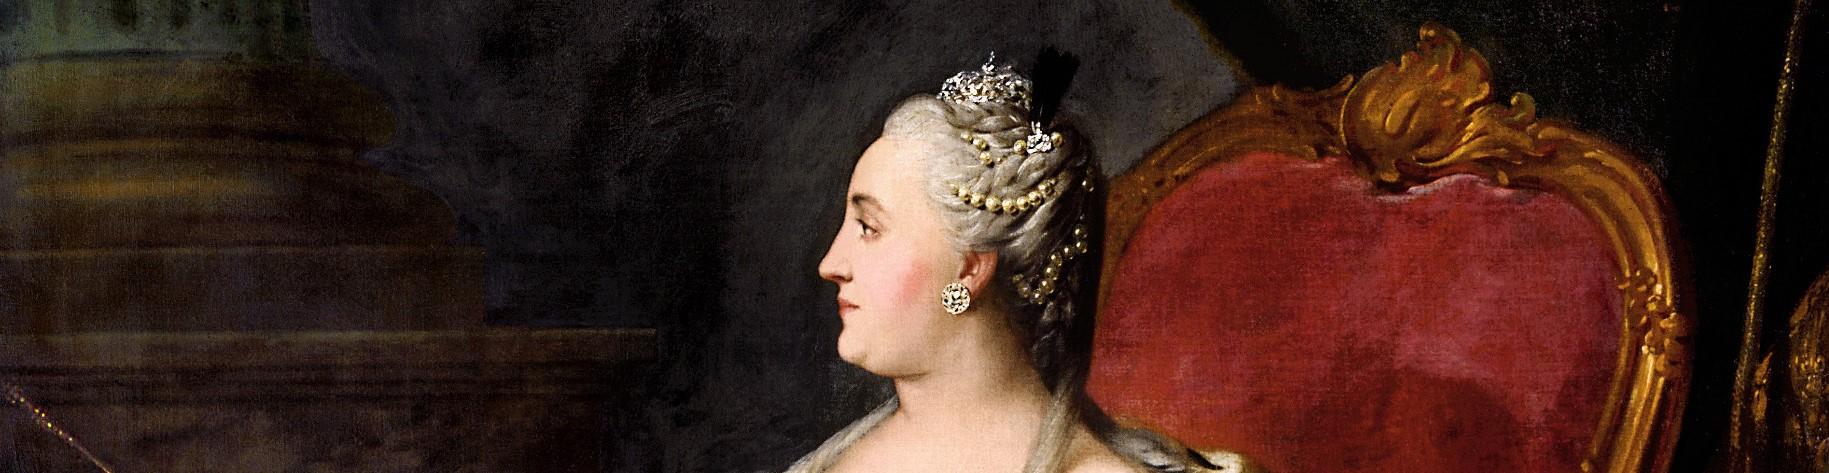 cross section of a portrait of an empress